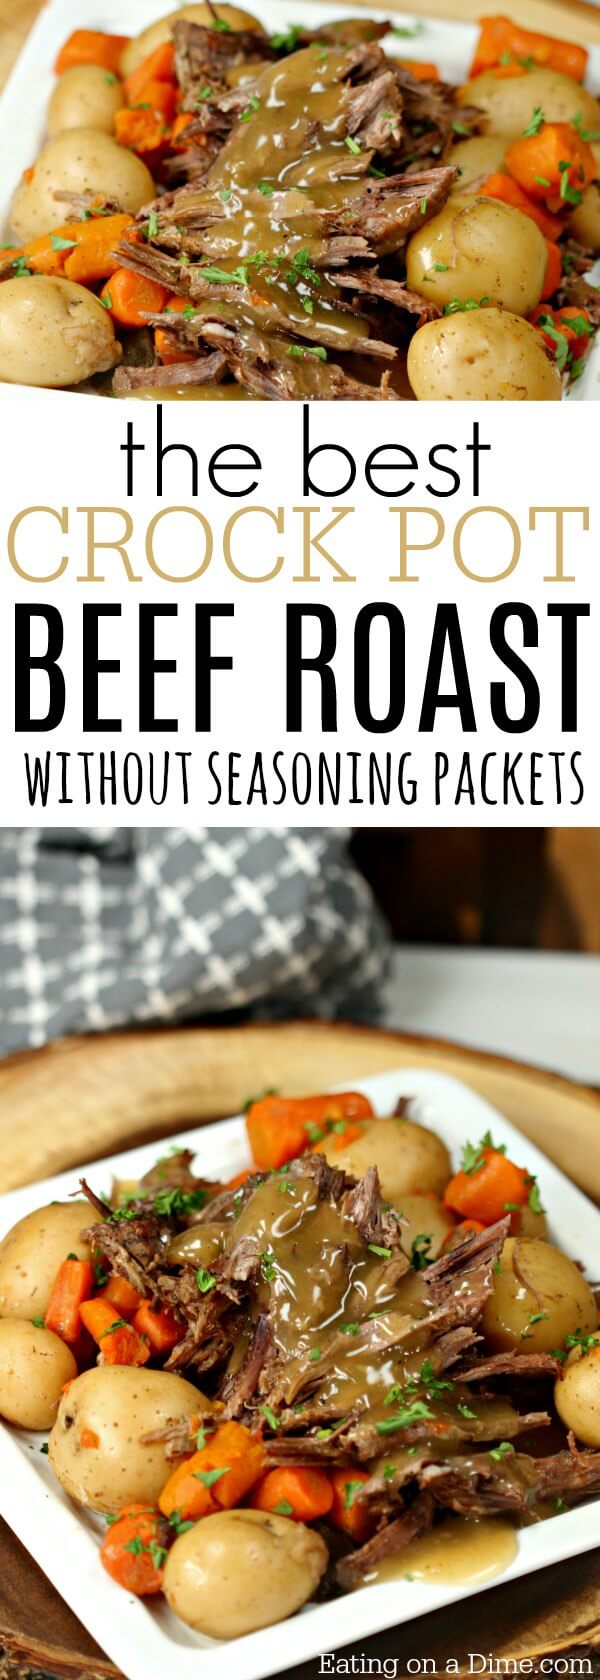 Easy Crock Pot Roast Recipe